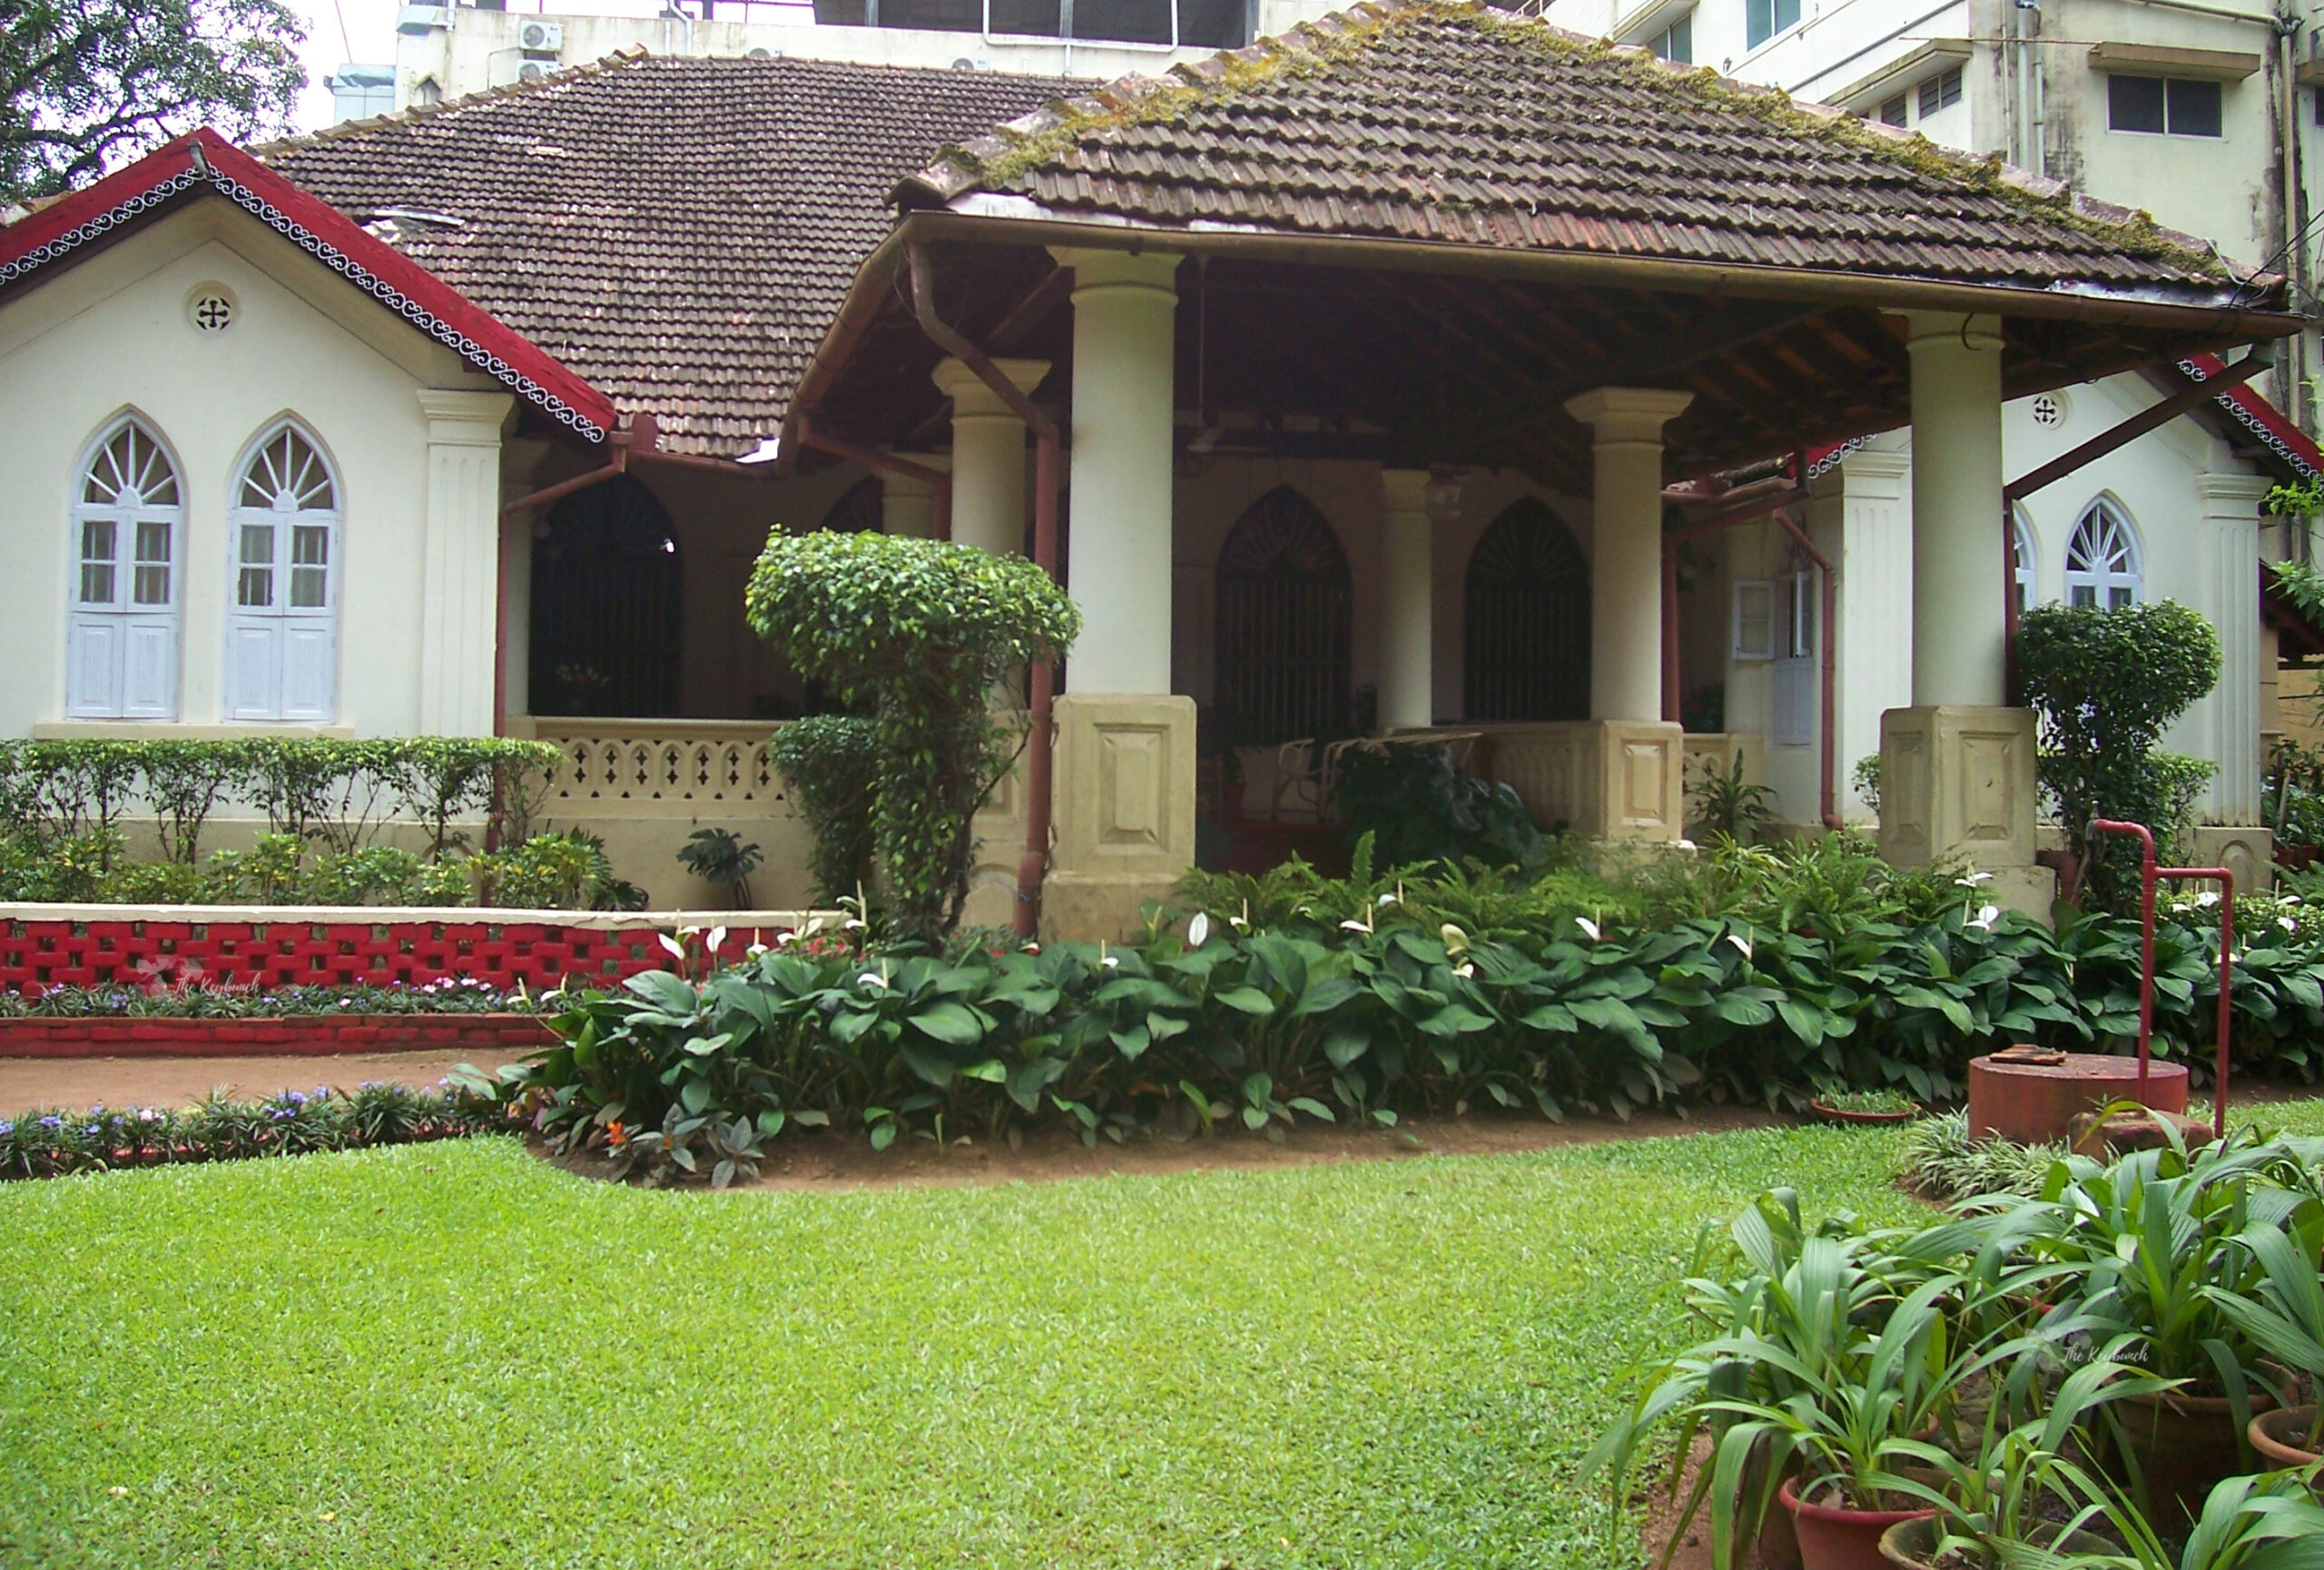 The beautiful manicured garden | Belmont House in Mangalore, India | TheKeybunch decor blog